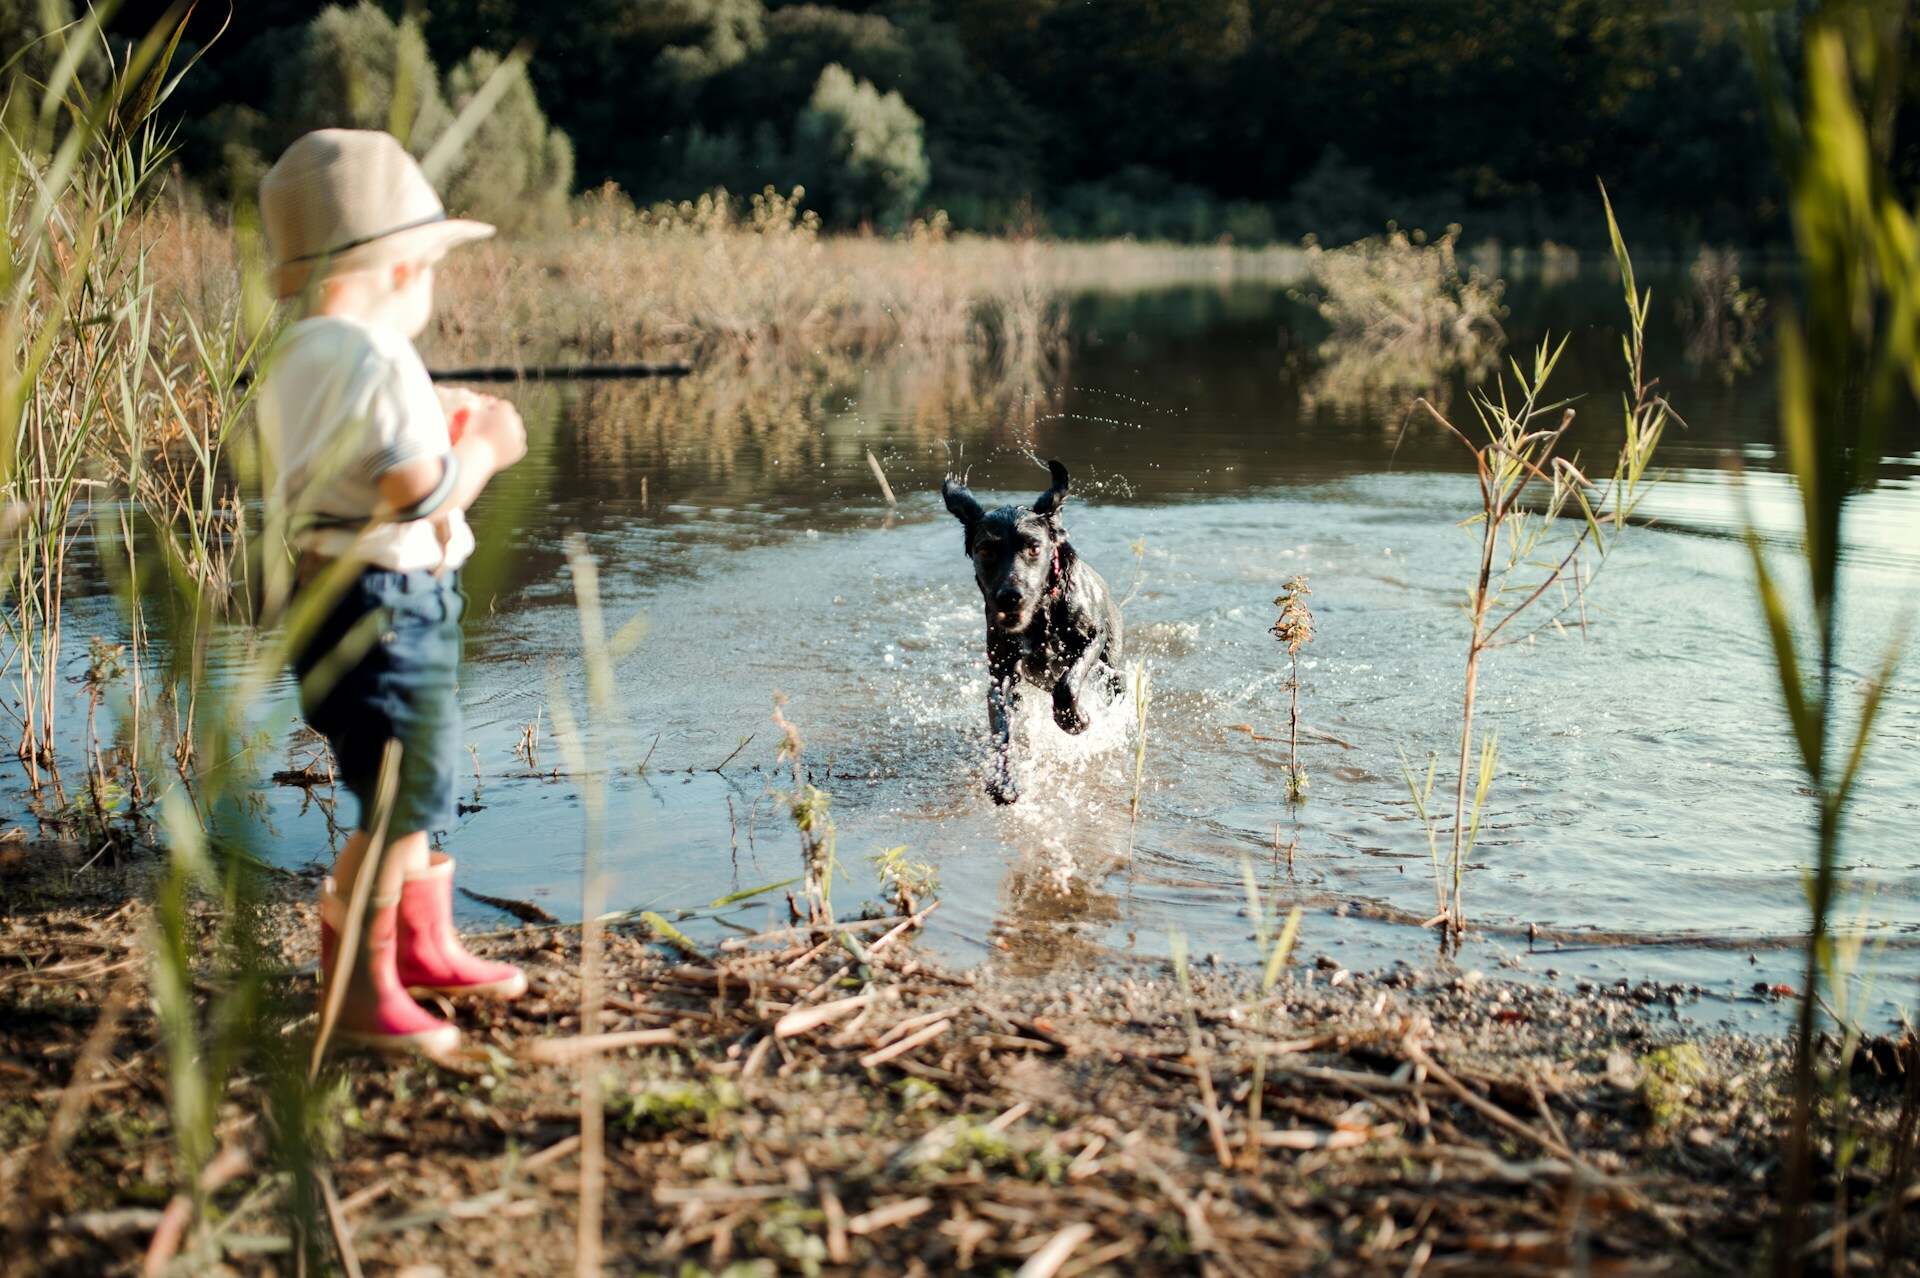 A dog splashing in a pond next to a child